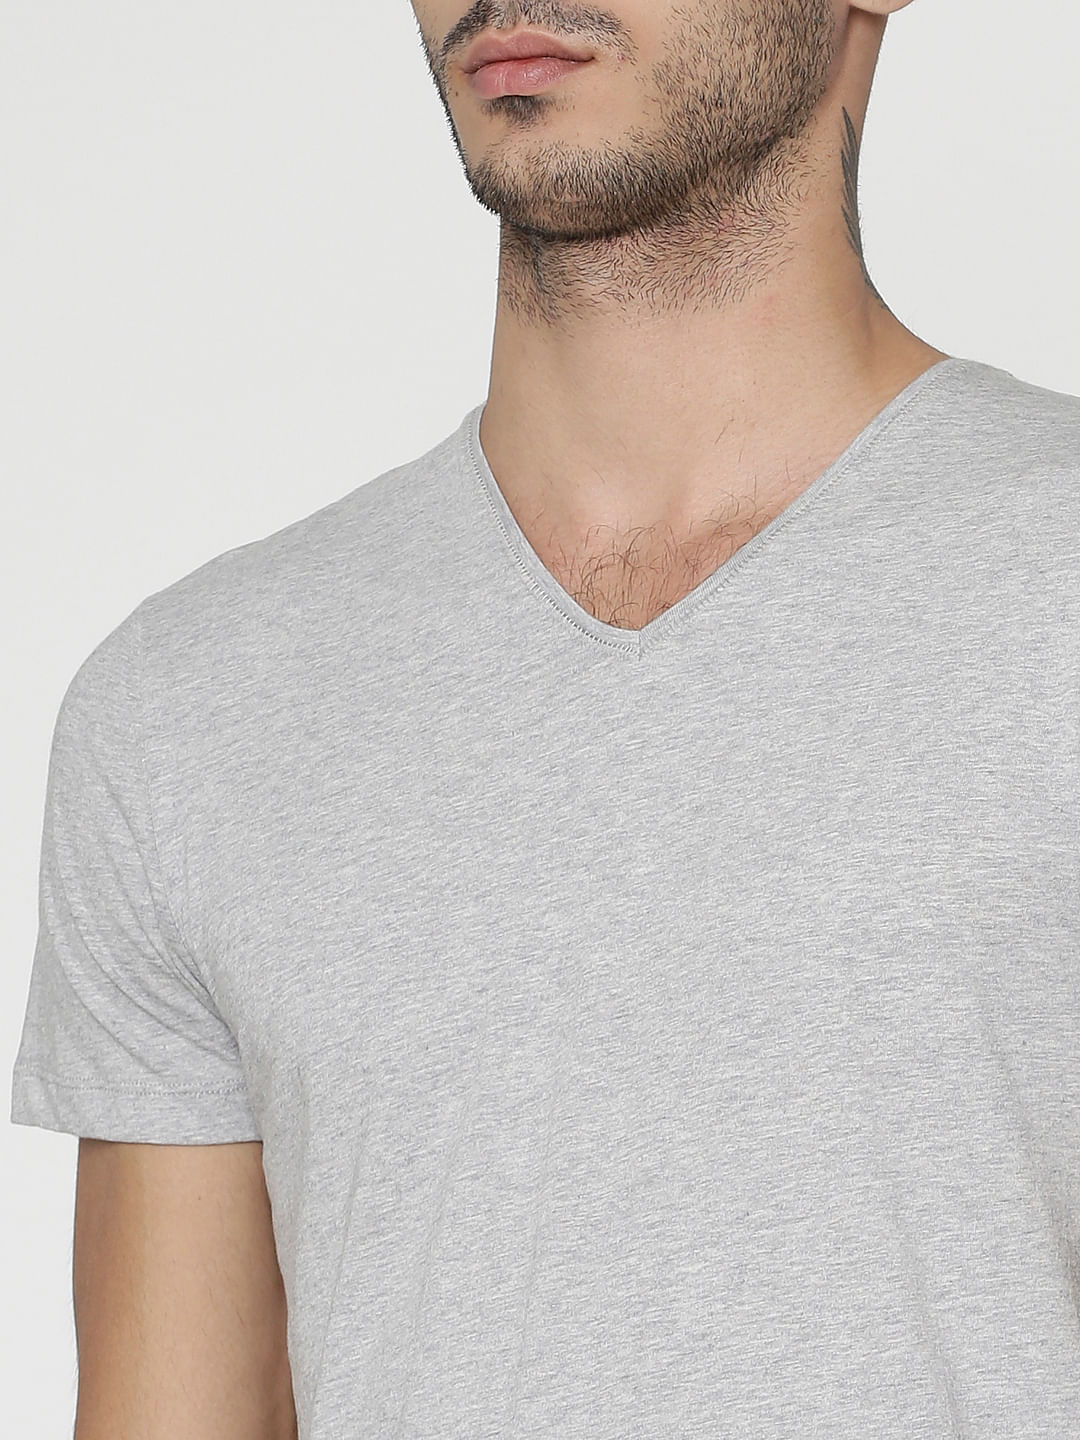 grey v neck t shirt